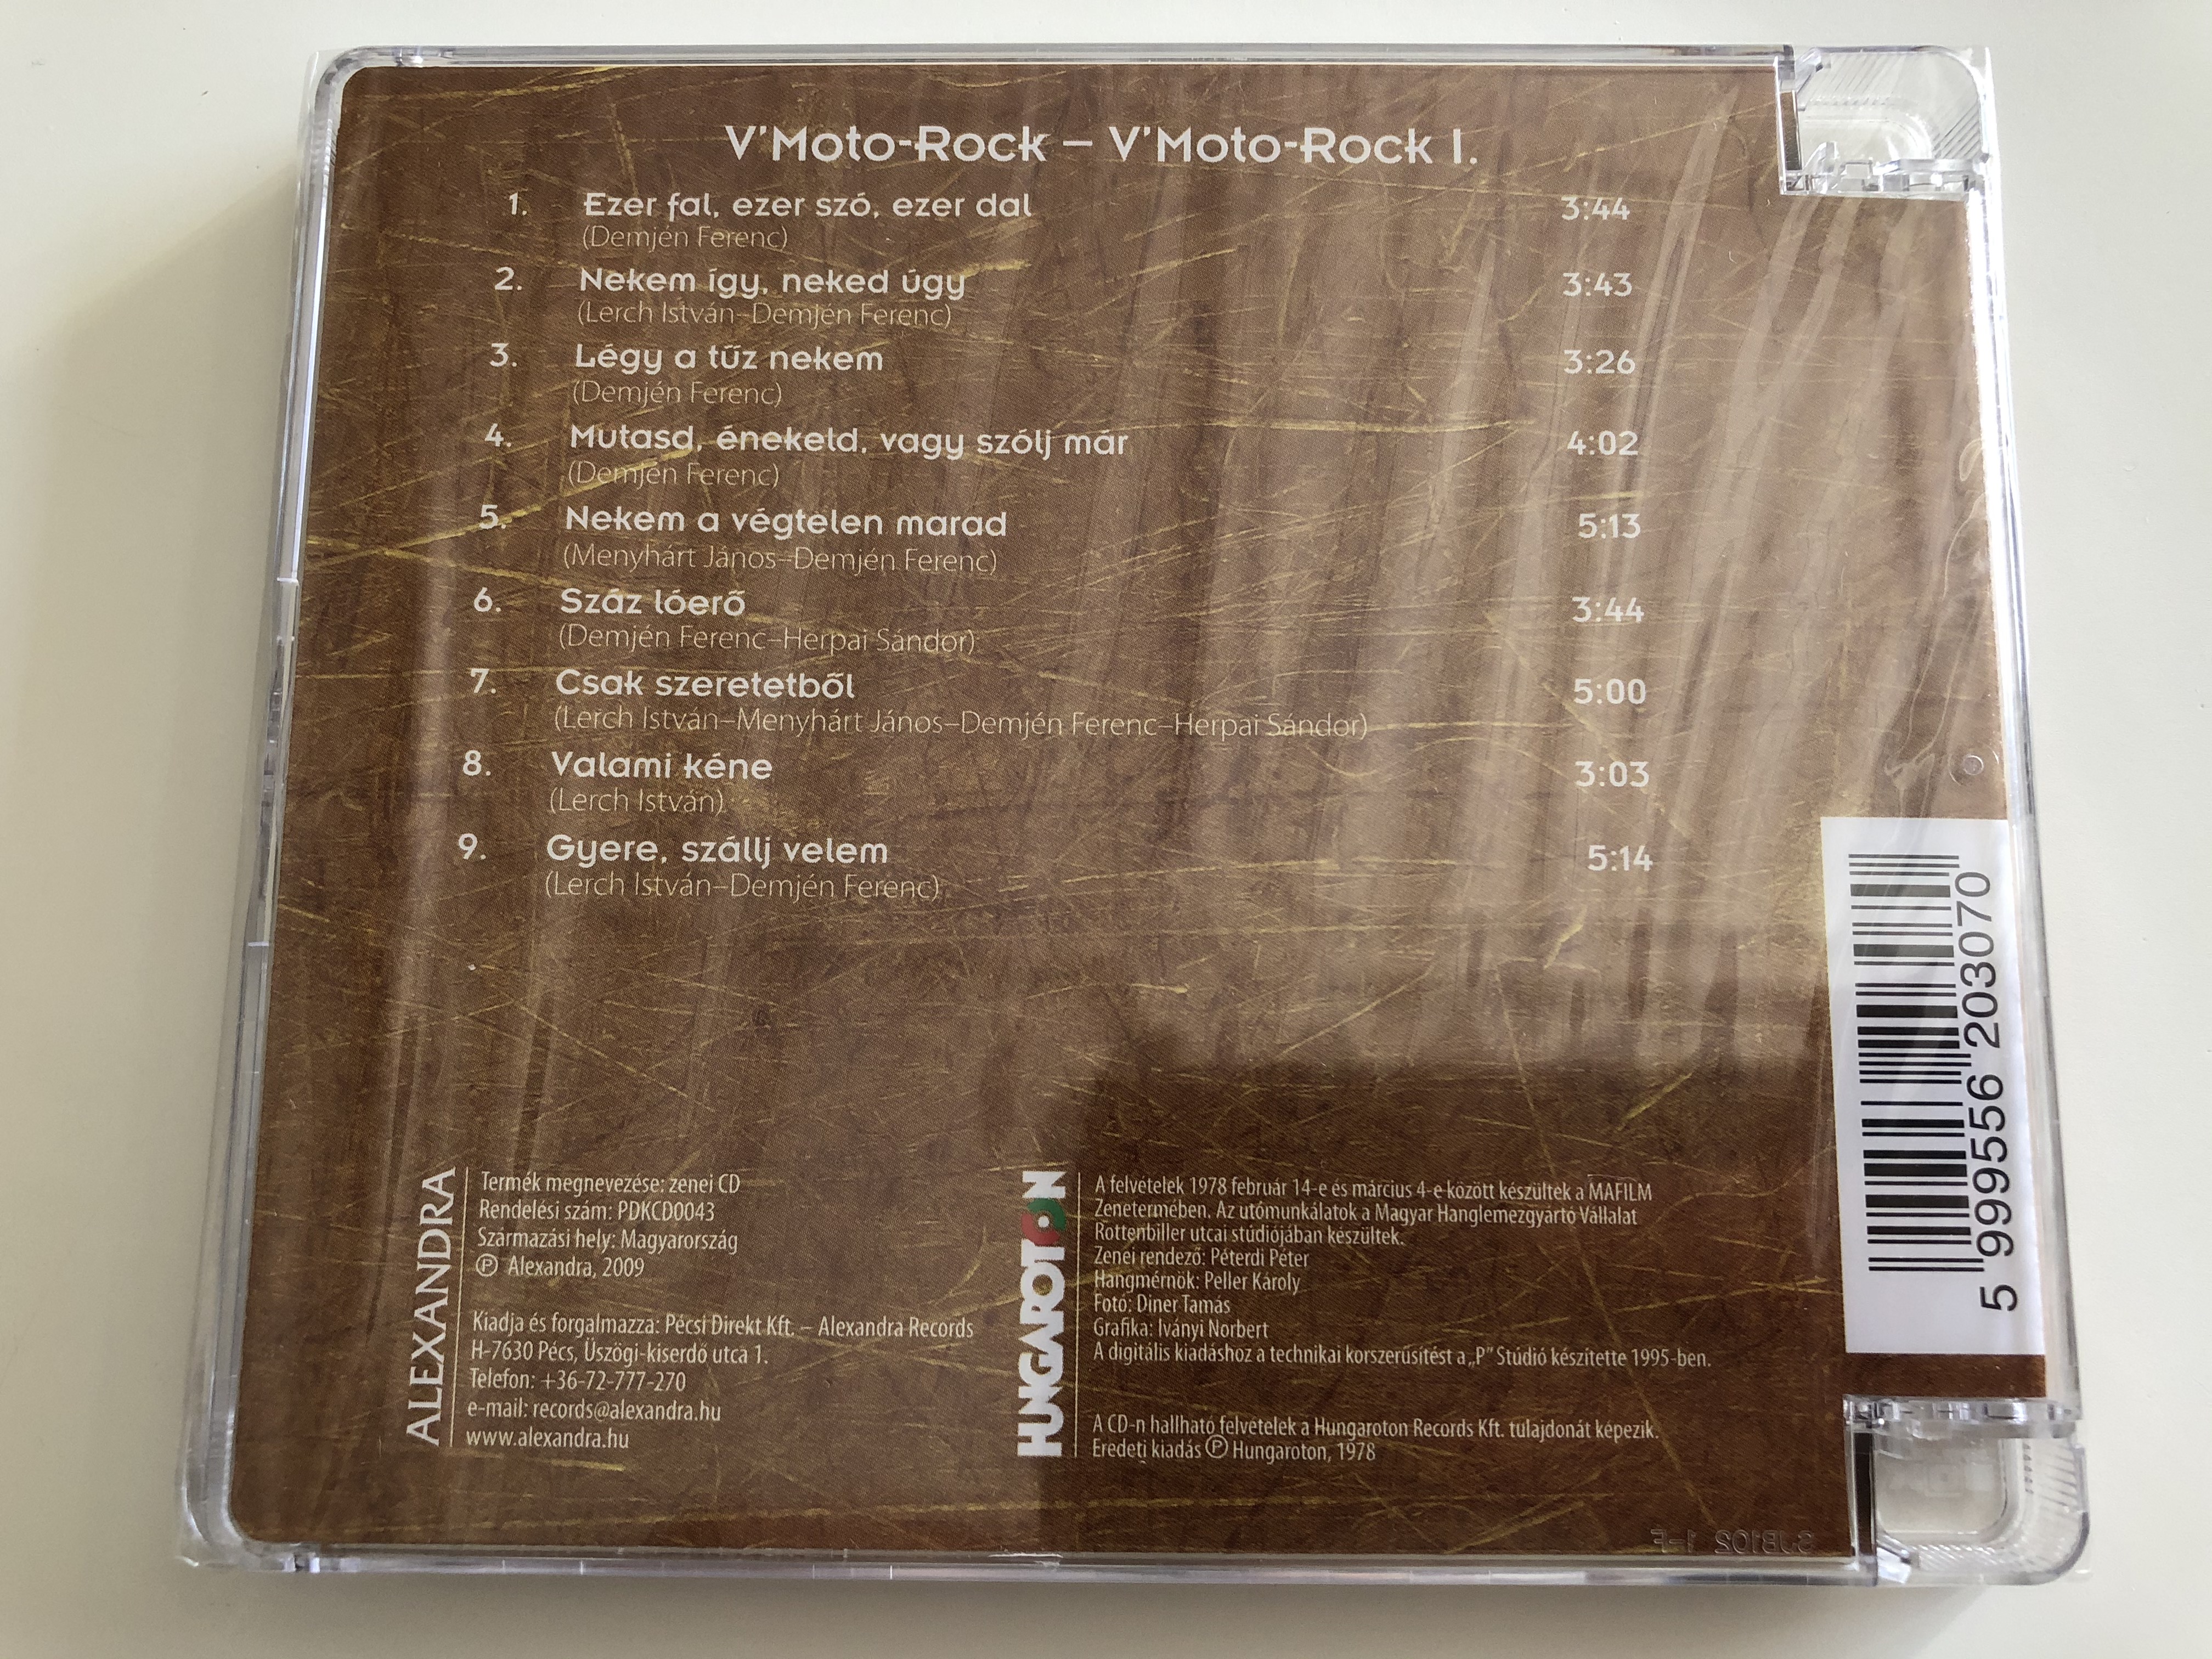 v-moto-rock-alexandra-records-audio-cd-2009-pdkcd0043-2-.jpg